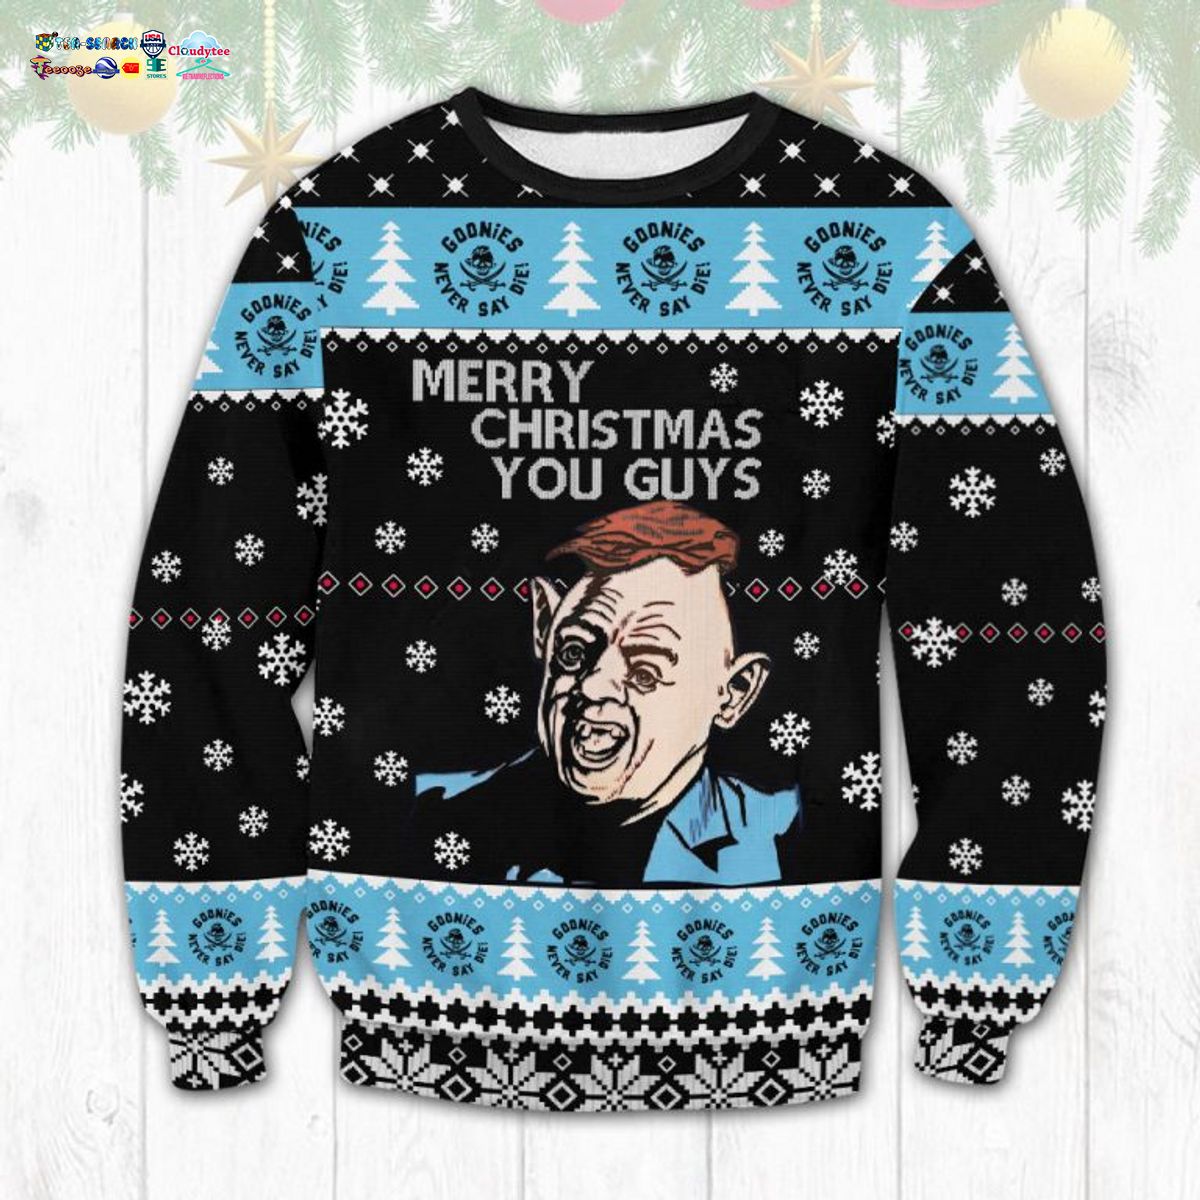 The Goonies Merry Christmas You Guys Ugly Christmas Sweater